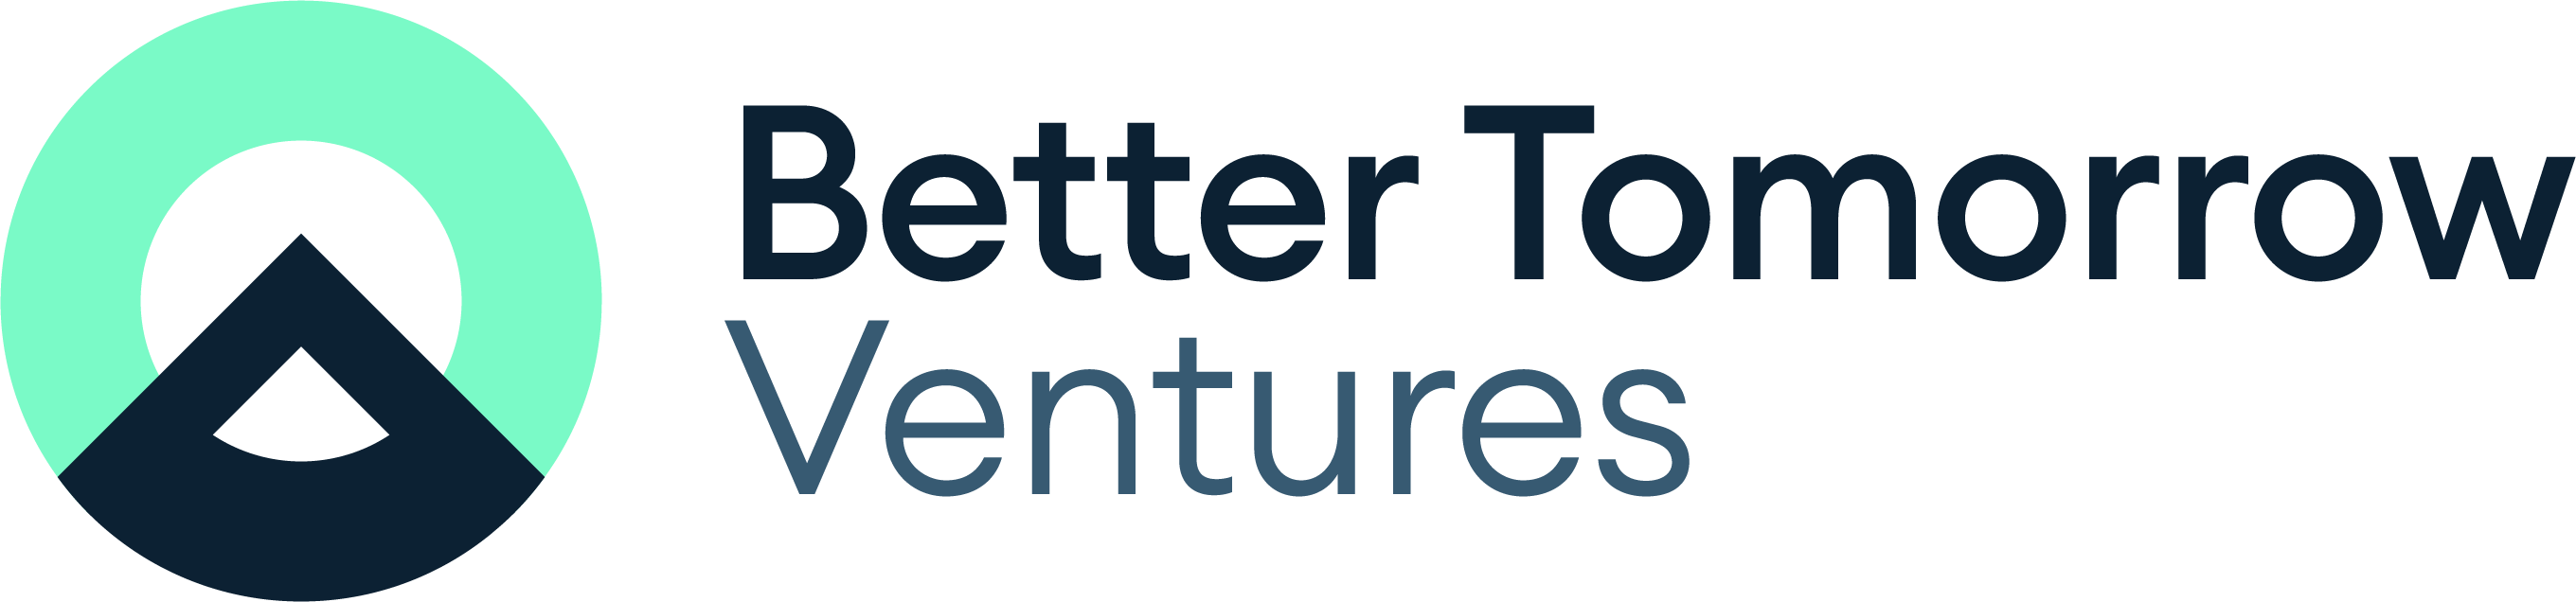 Better Tomorrow Ventures (BTV)